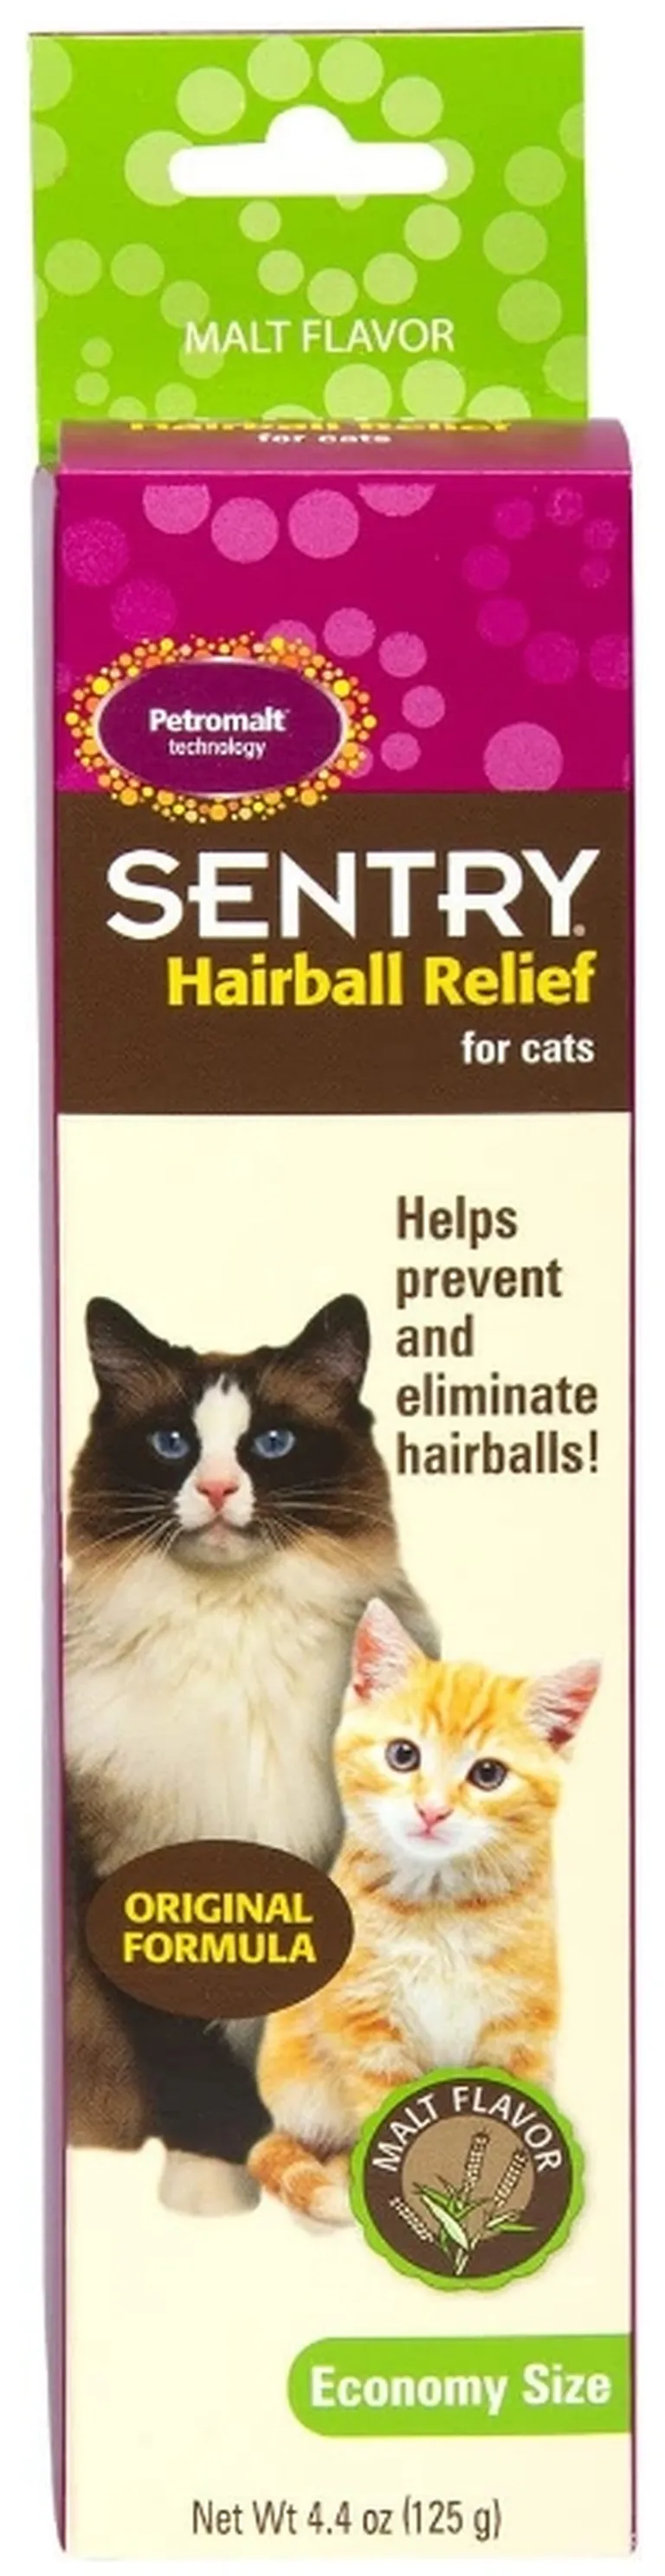 Sentry Petromalt Hairball Relief for Cats Malt Flavor Photo 2